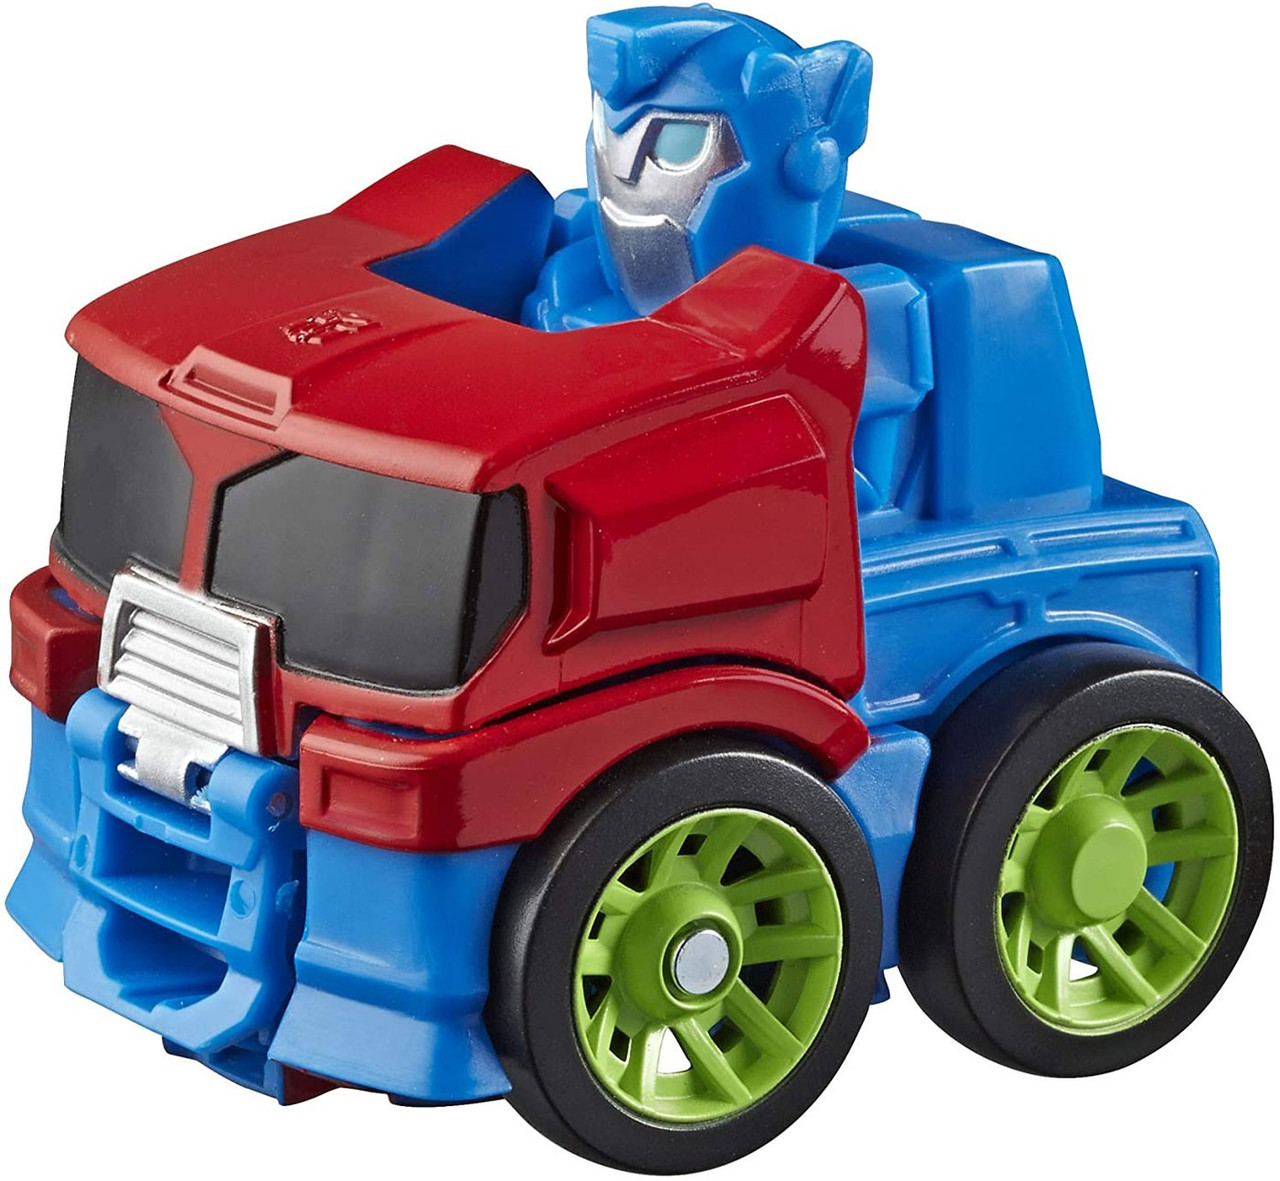 transformers rescue bots optimus prime